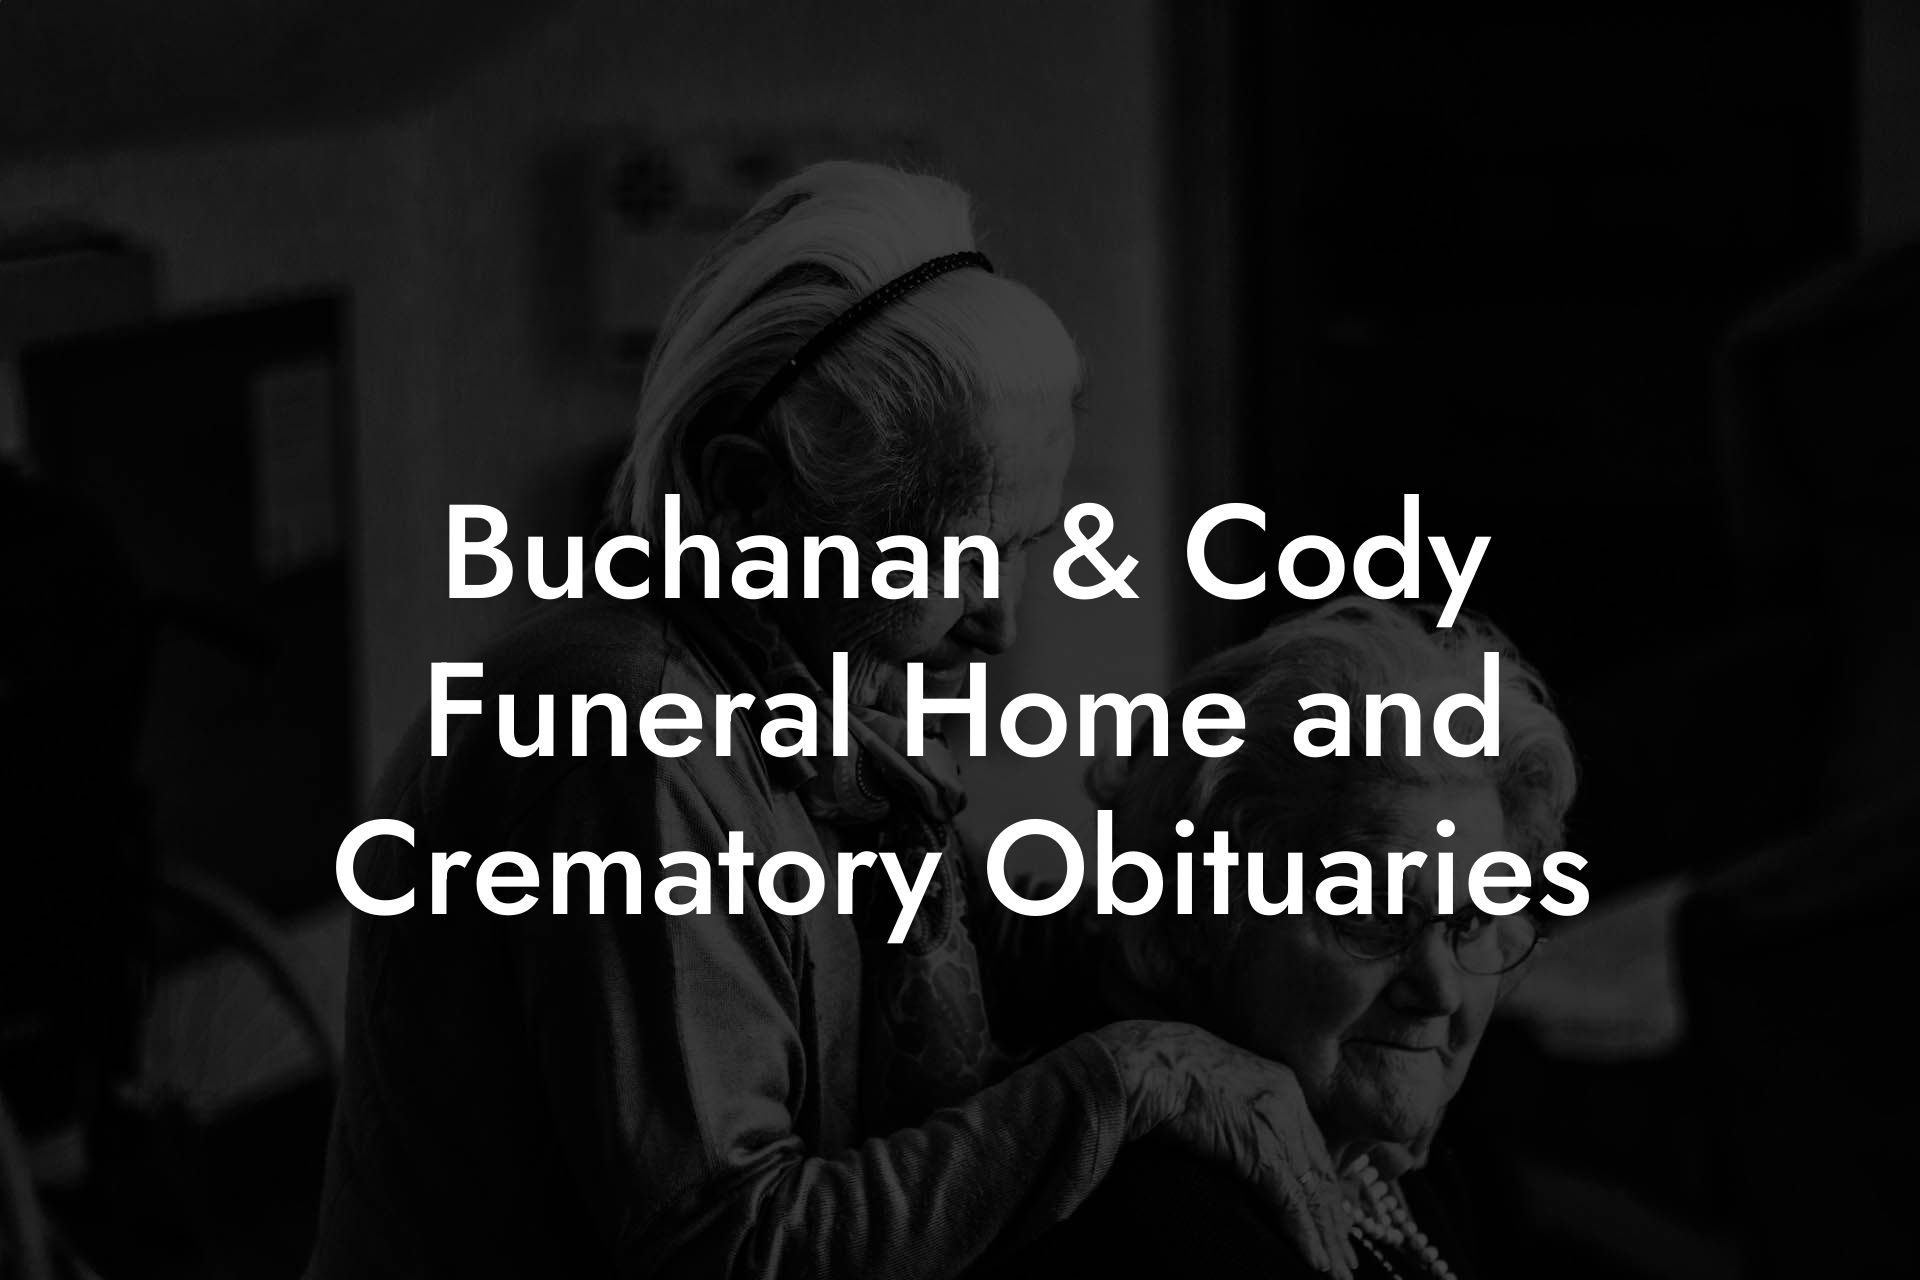 Buchanan & Cody Funeral Home and Crematory Obituaries